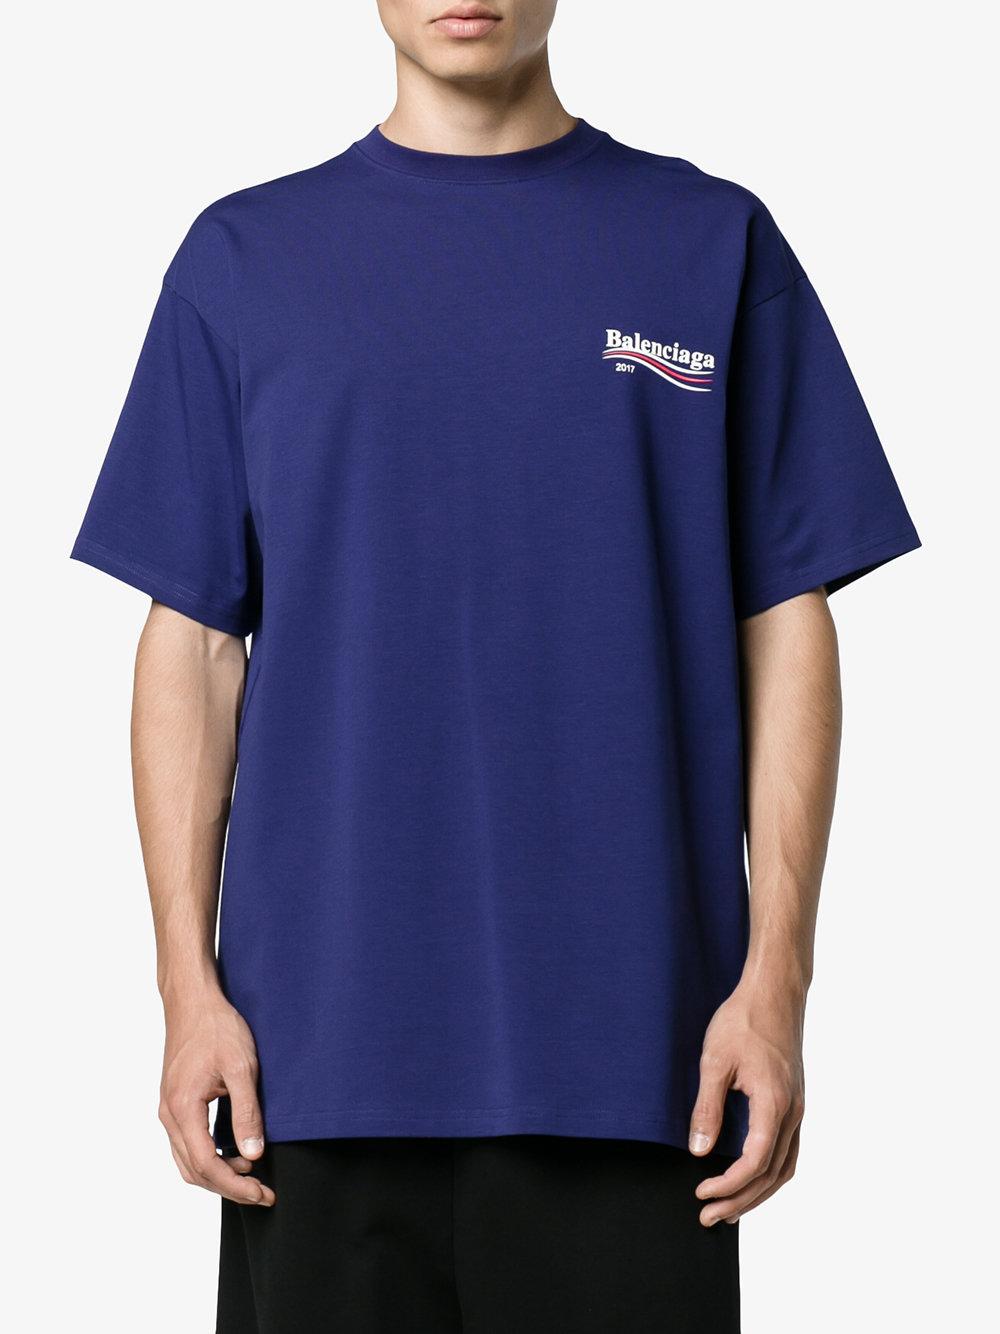 Lyst - Balenciaga Oversized Logo-print Cotton T-shirt in Blue for Men